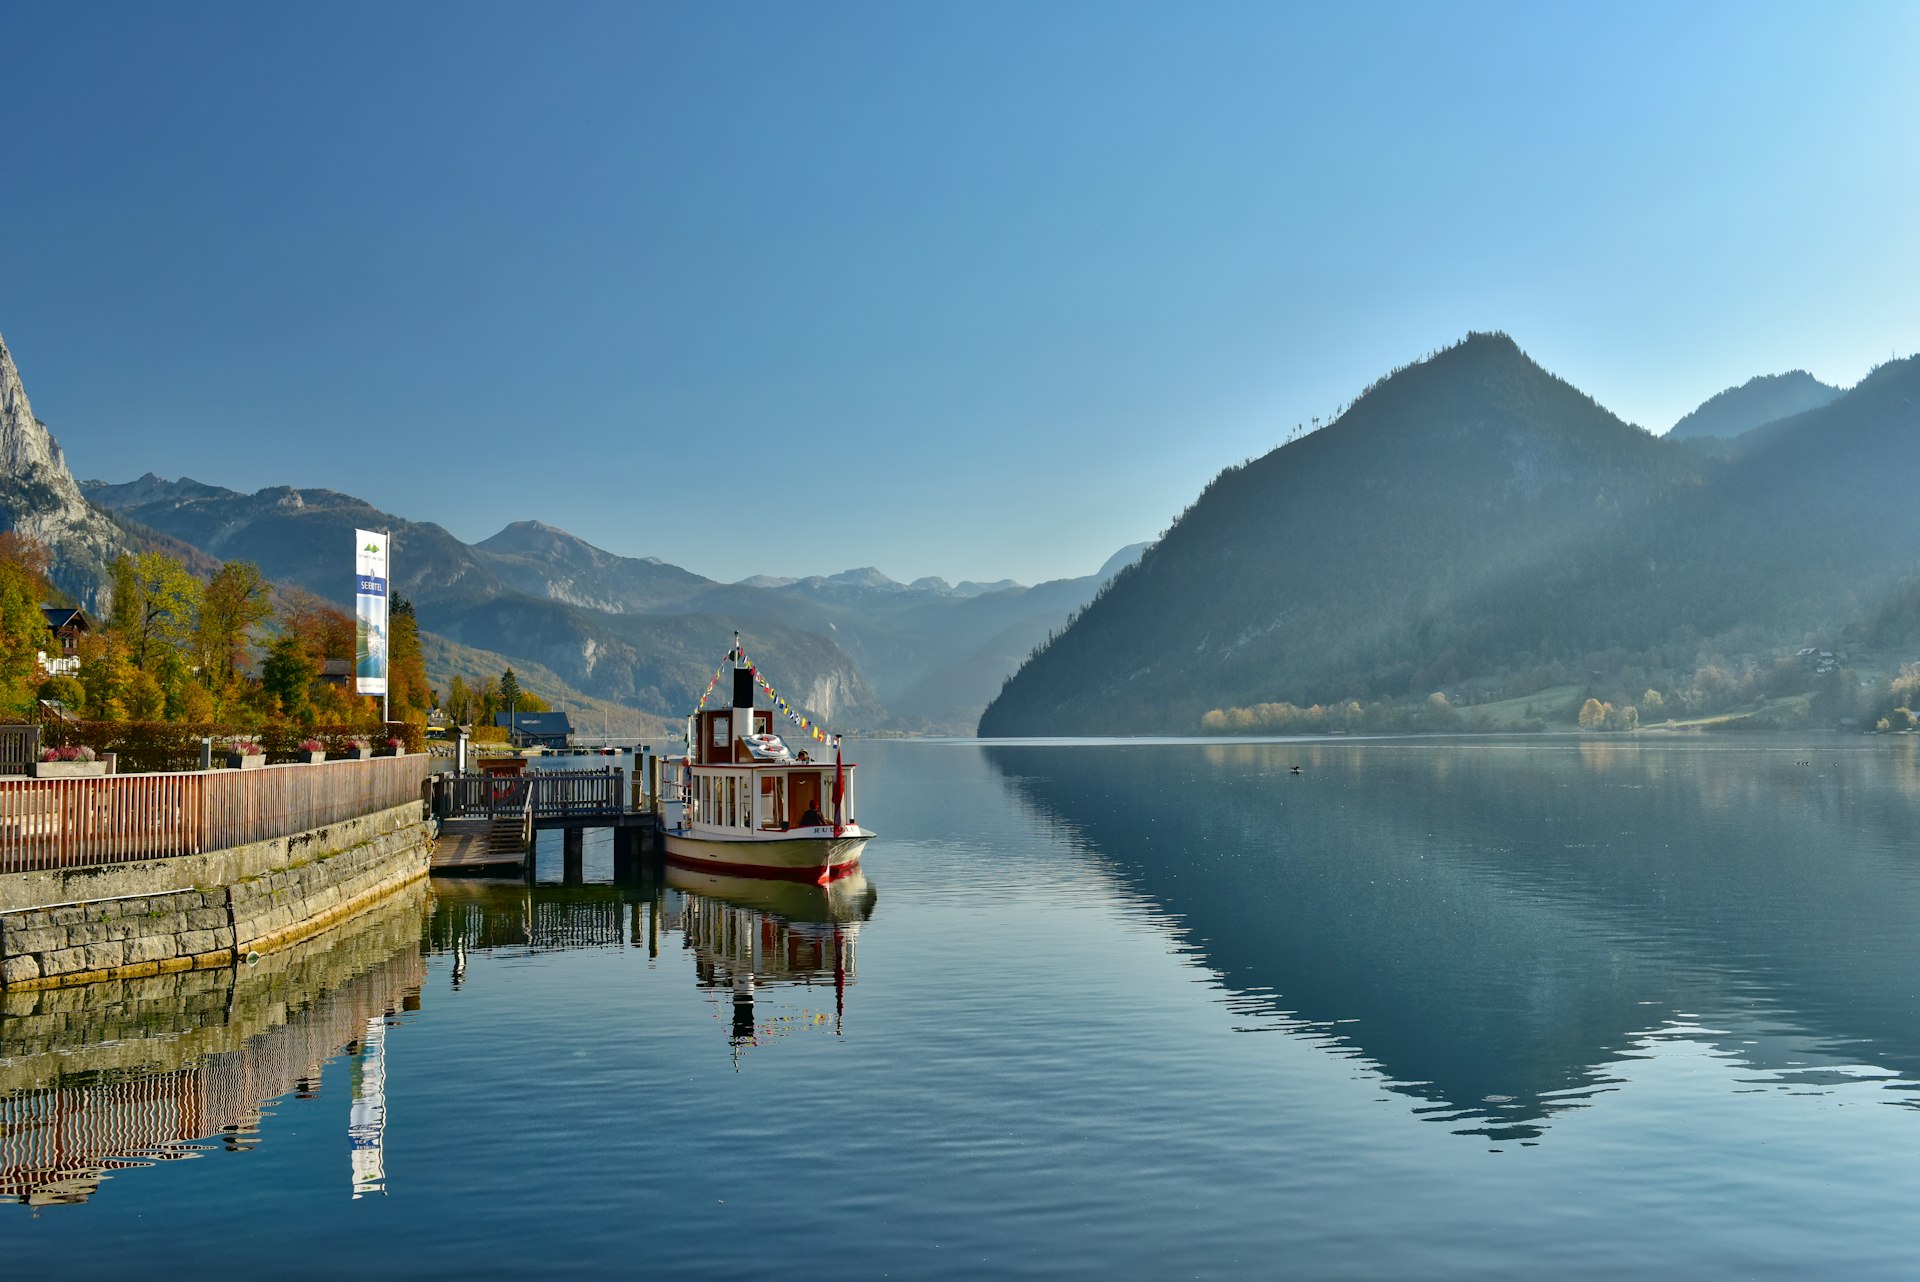 Passenger ship on the lake Grundlsee, Austria